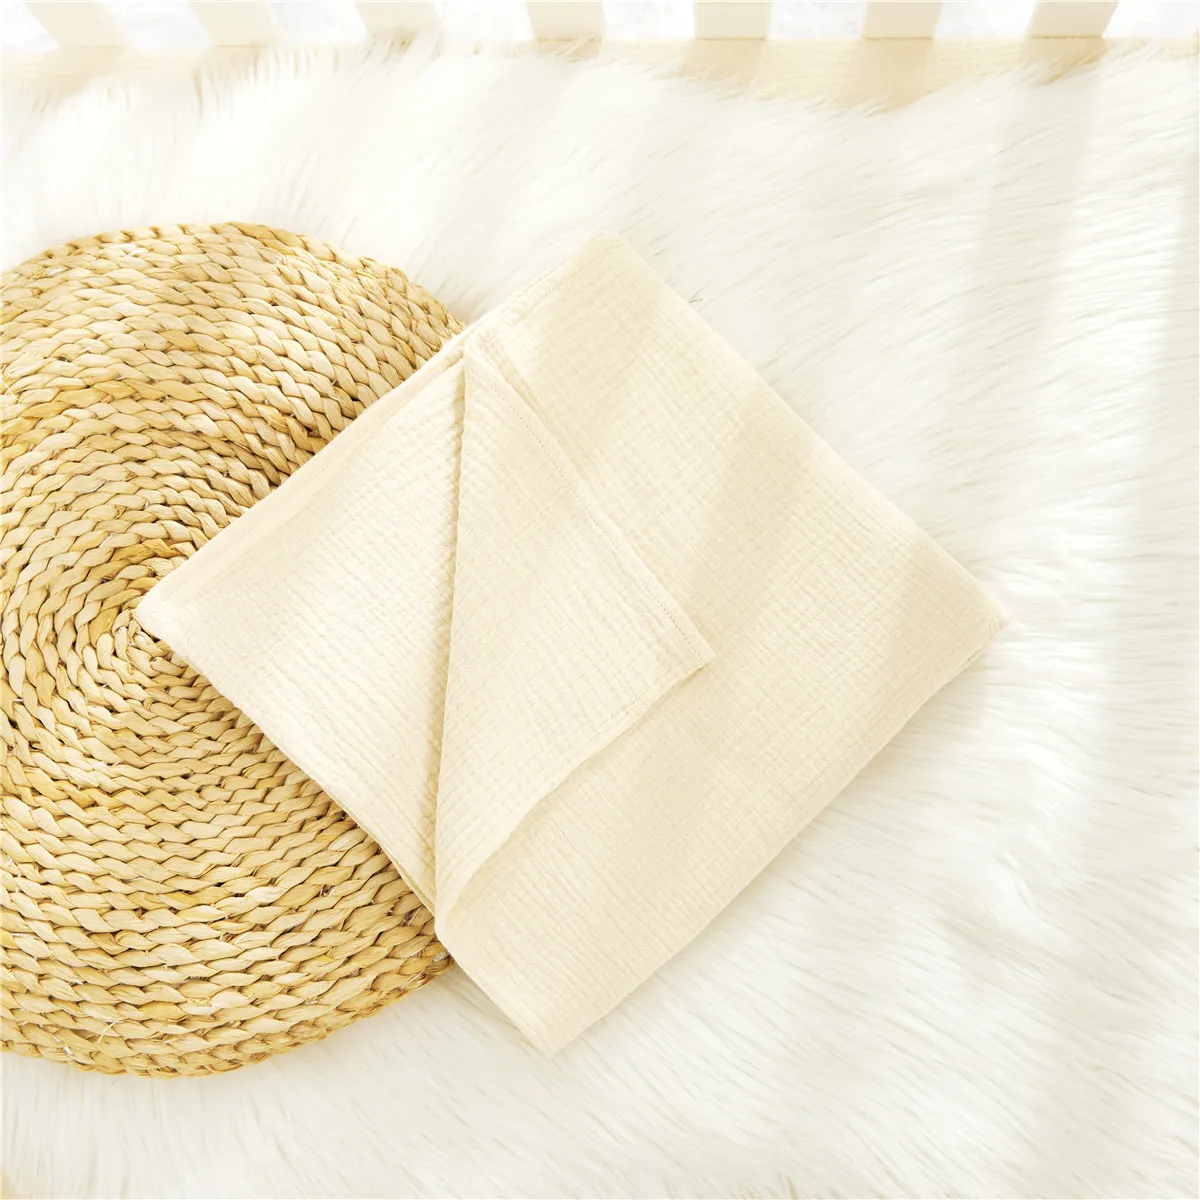 100% Cotton Muslin Baby Gear Includes Bib / Swaddling Blanket / Crib Sheet / Single Layer Quilt / Burp Cloth / Pillow / Washcloth